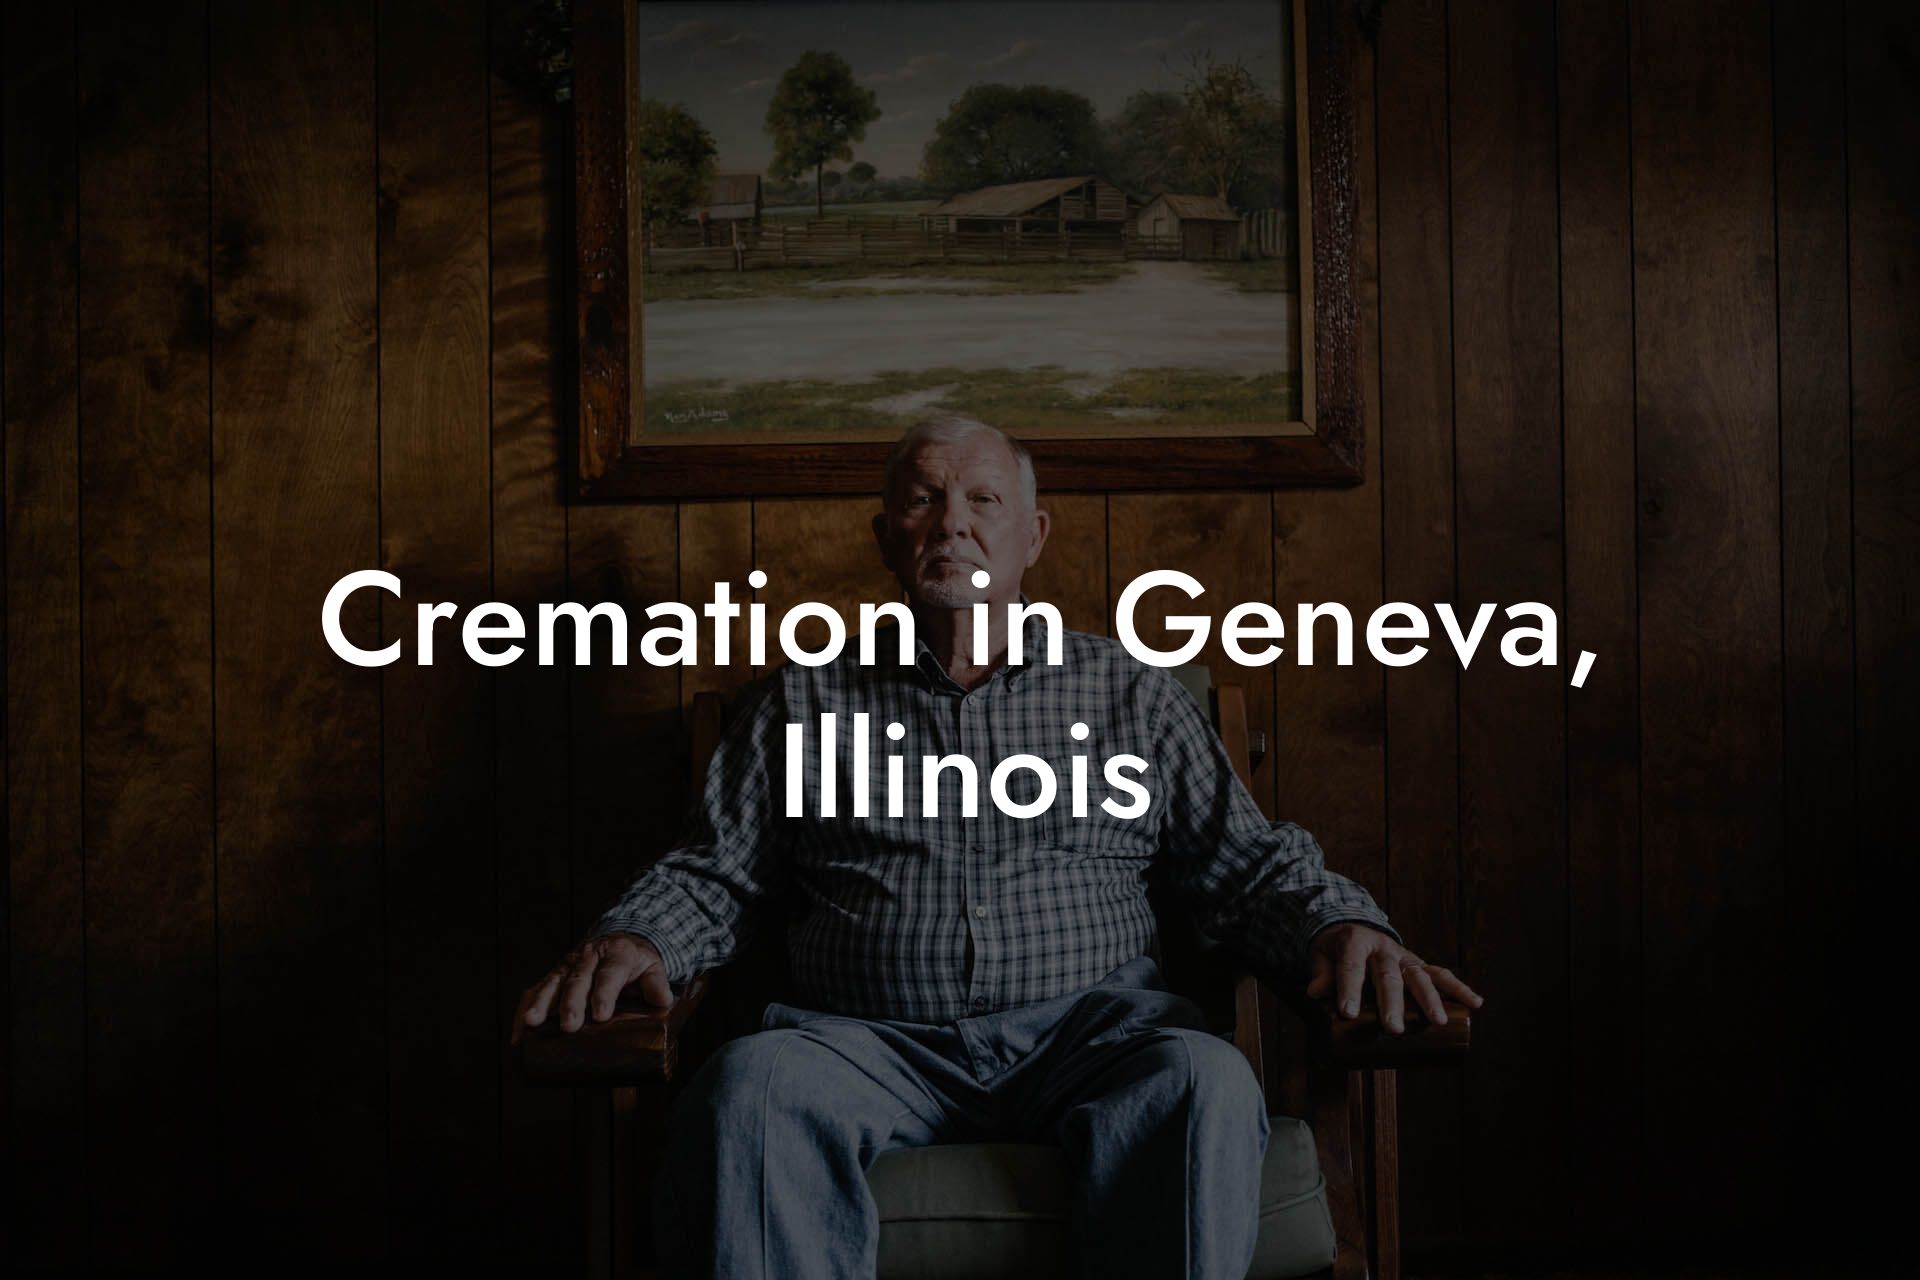 Cremation in Geneva, Illinois